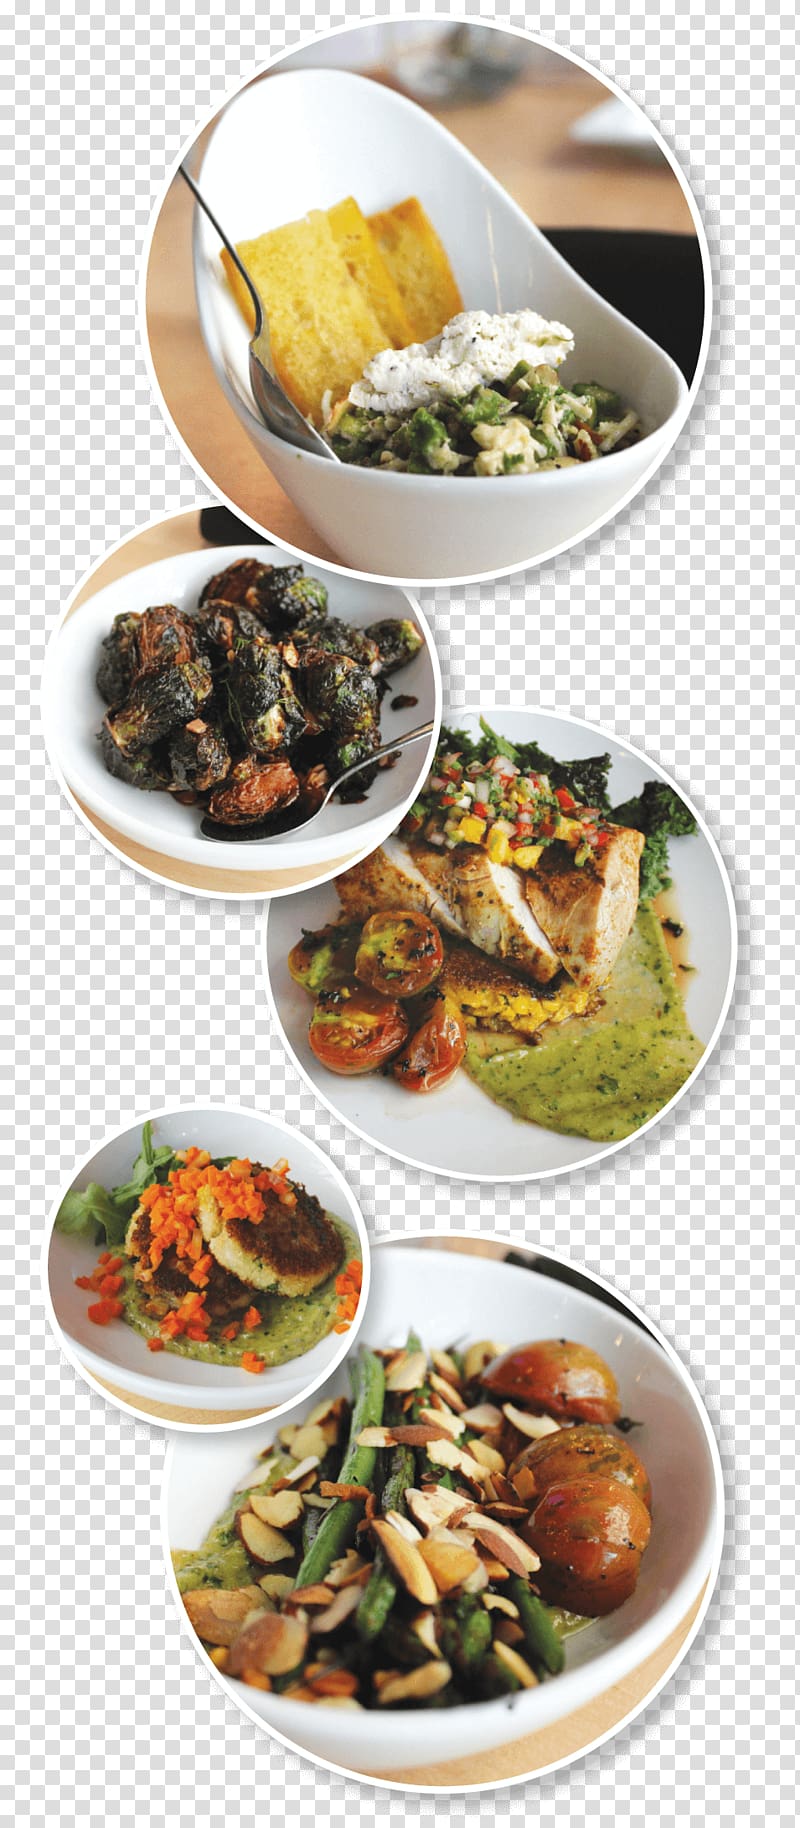 Vegetarian cuisine Meze Plate lunch Asian cuisine, restaurant dishes transparent background PNG clipart